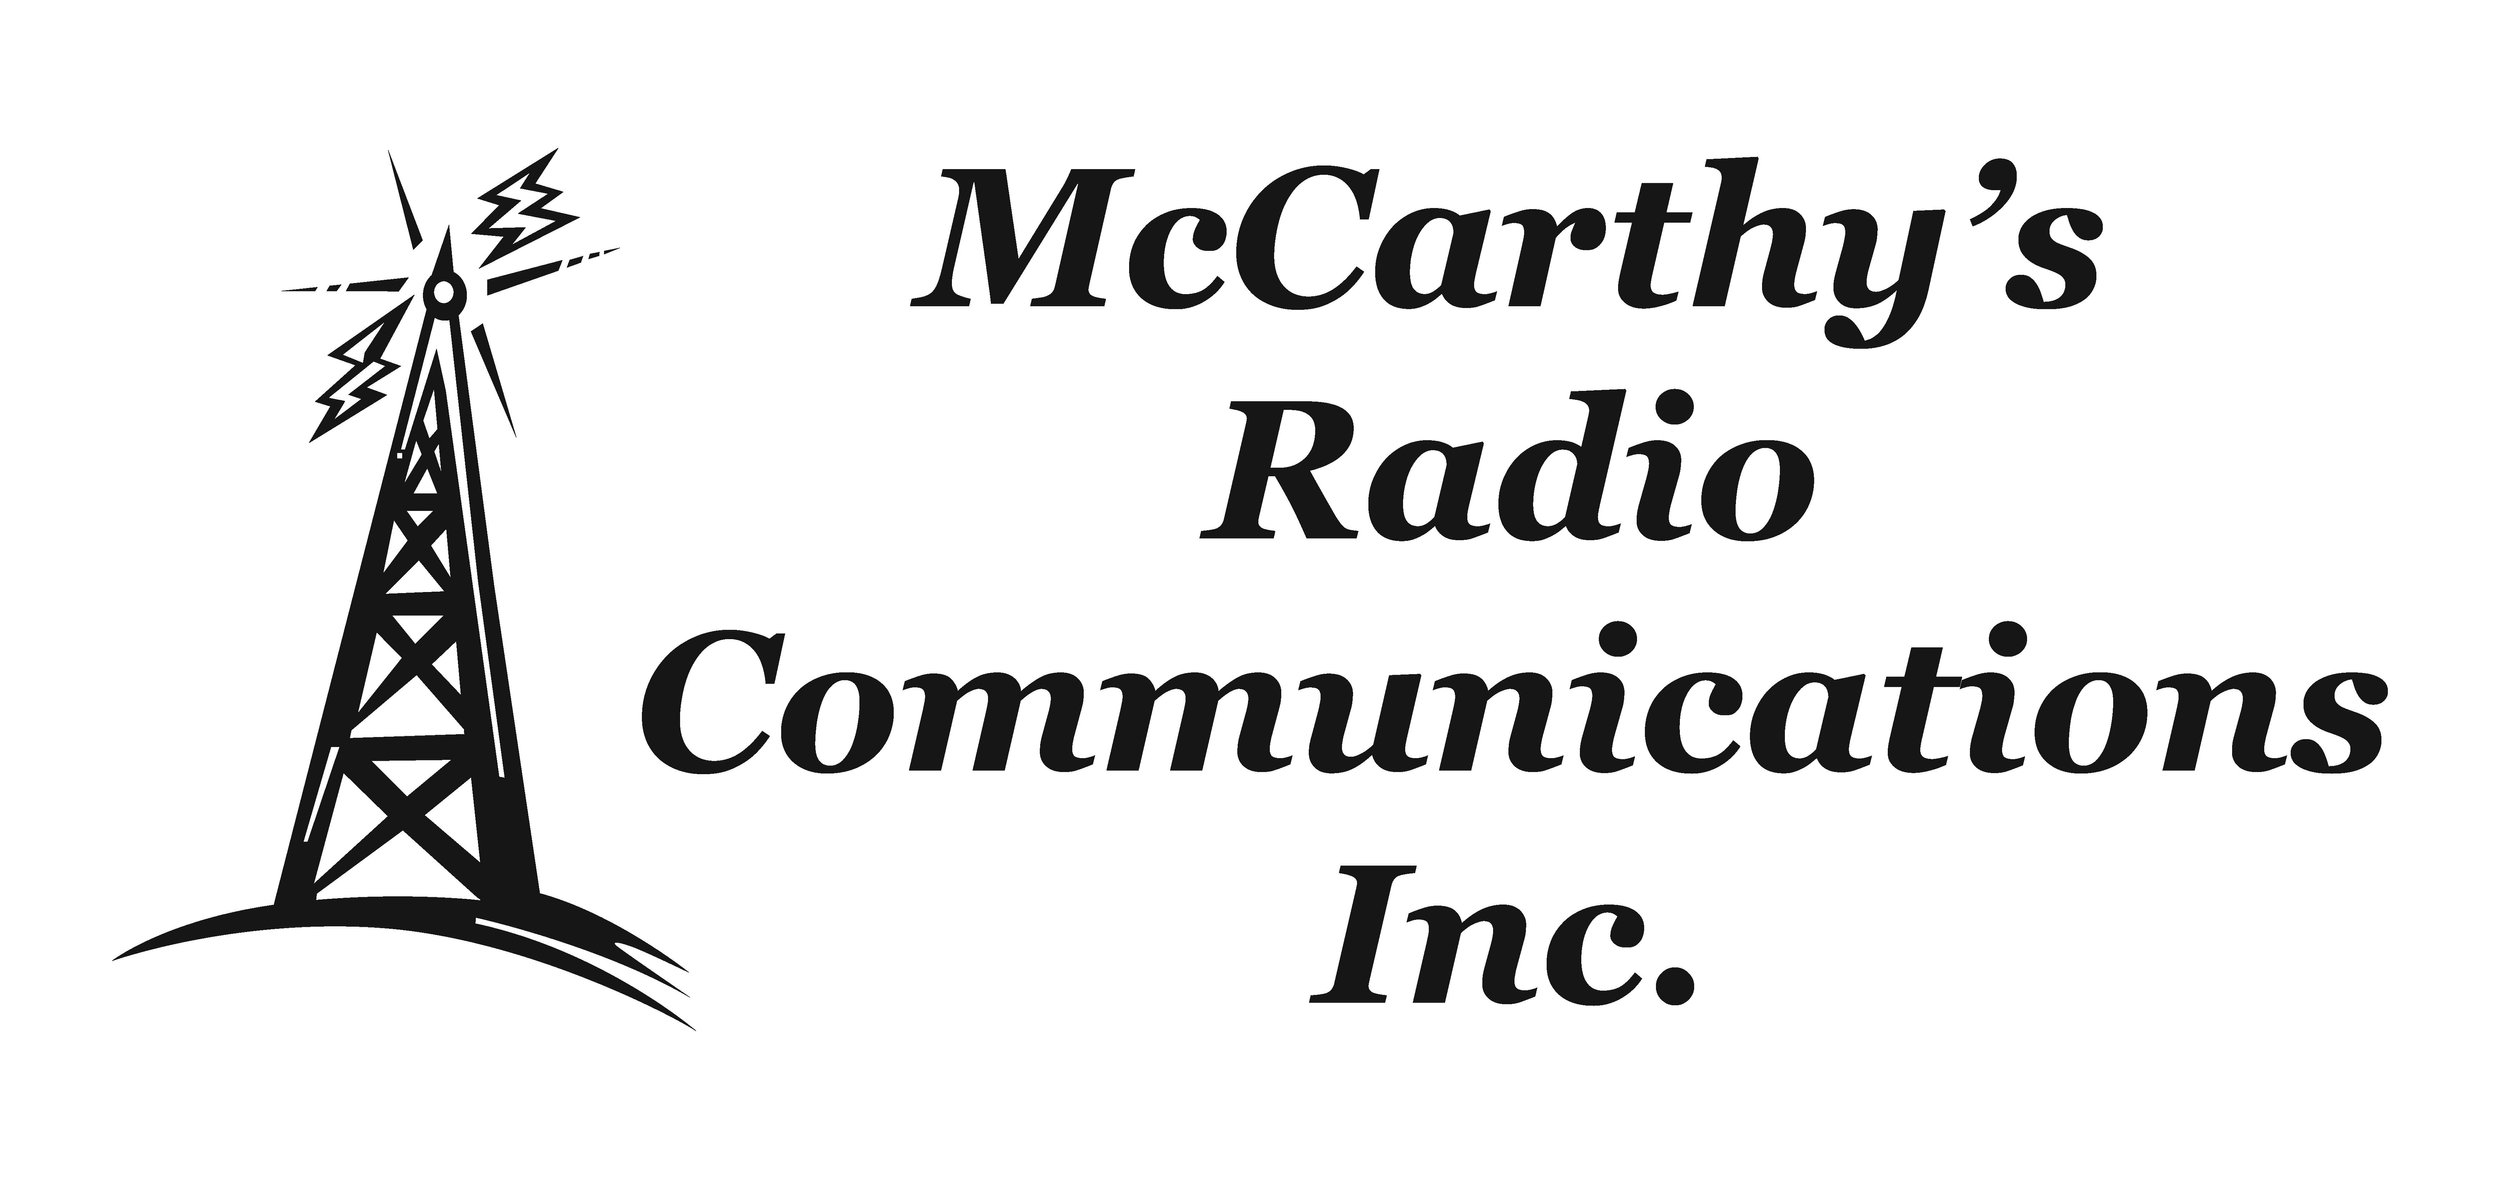 McCarthy's Radio Logo.jpg